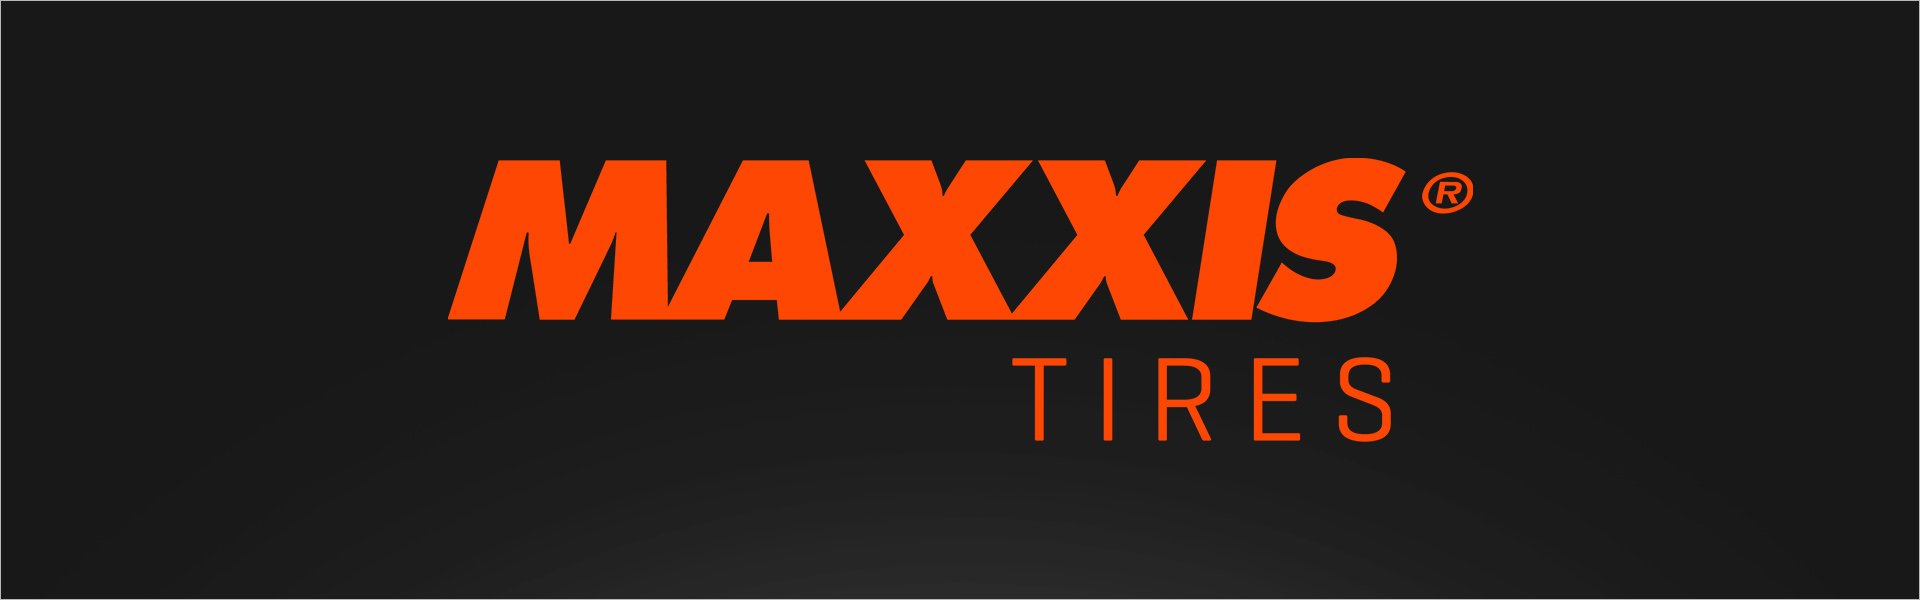 Maxxis ME3 185/65R15 88 T Maxxis